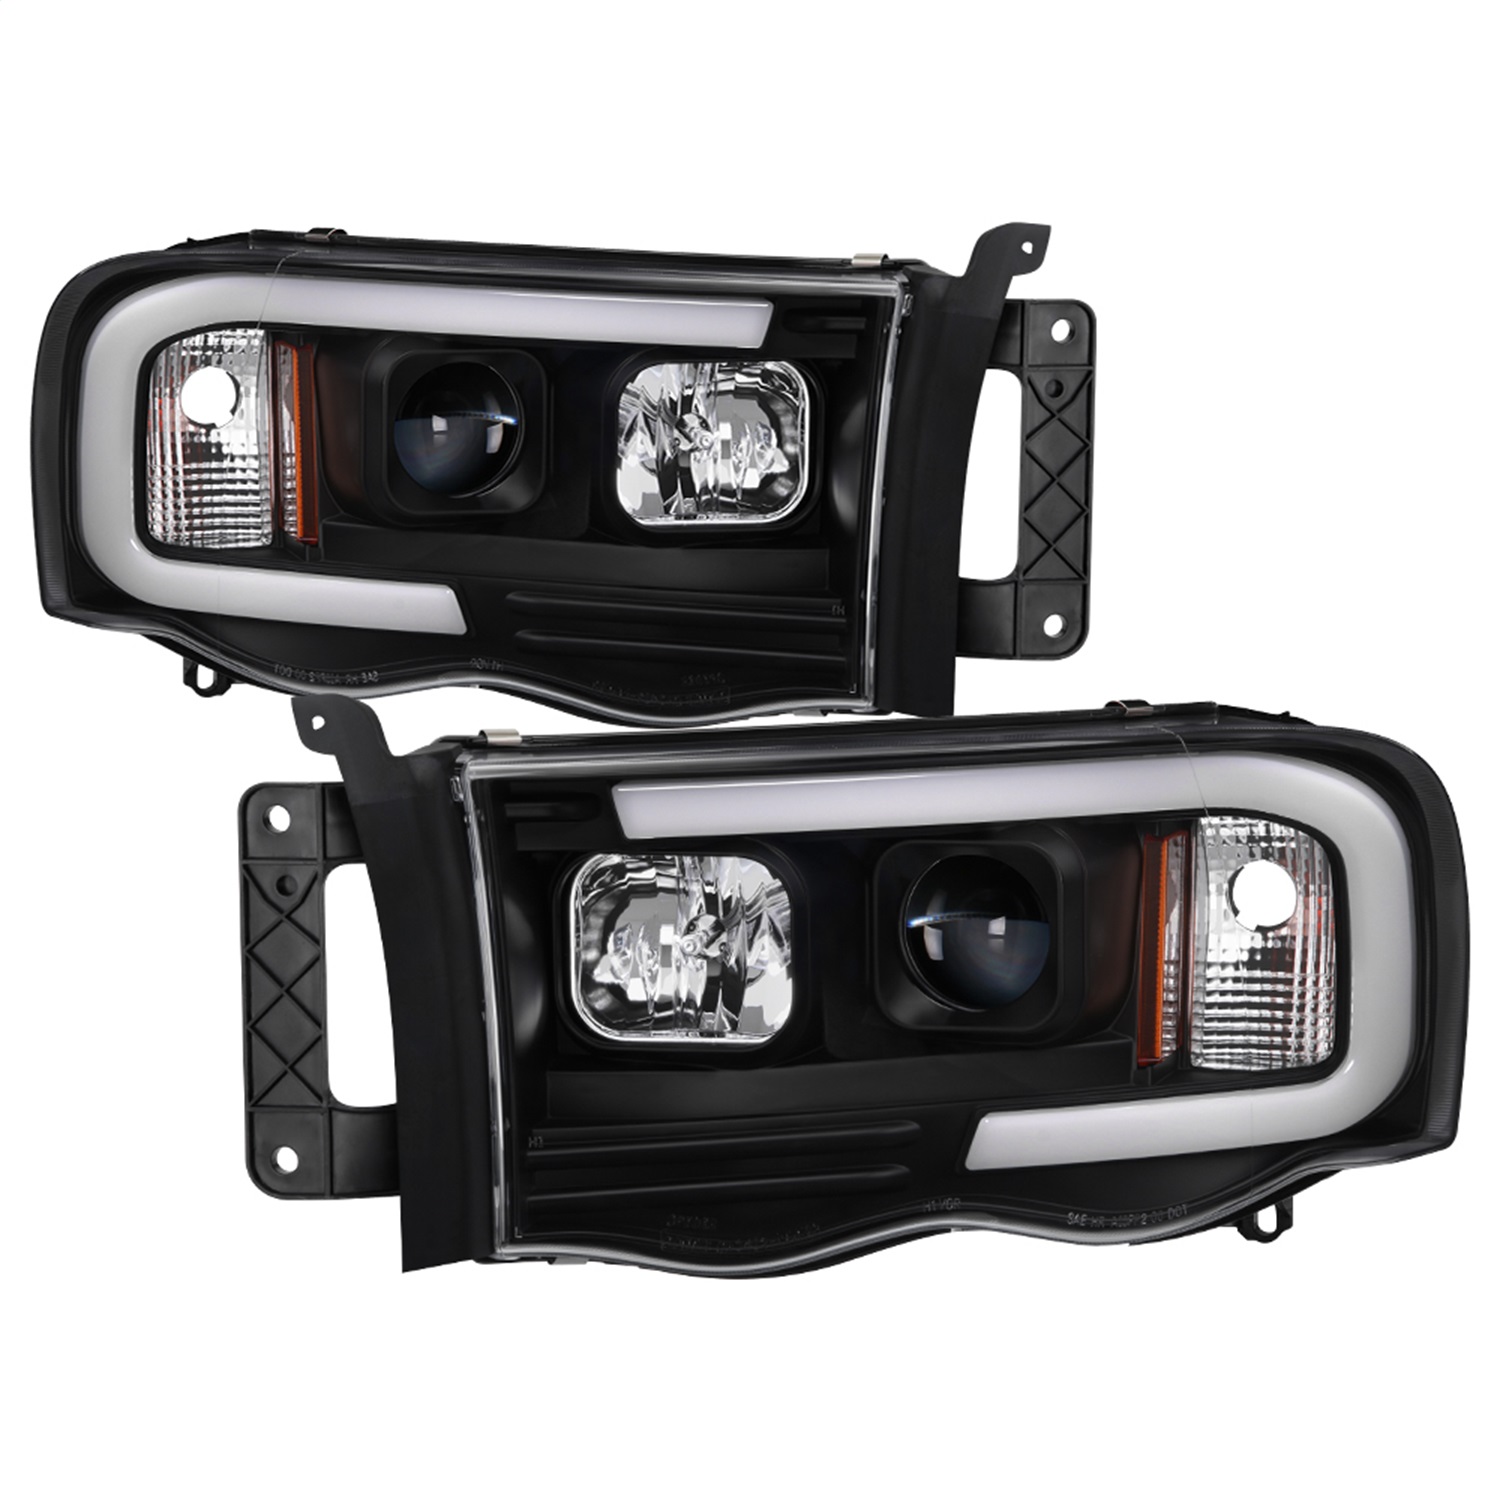 Spyder Auto 5084606 Projector Headlights Fits 02-05 Ram 1500 Ram 2500 Ram 3500